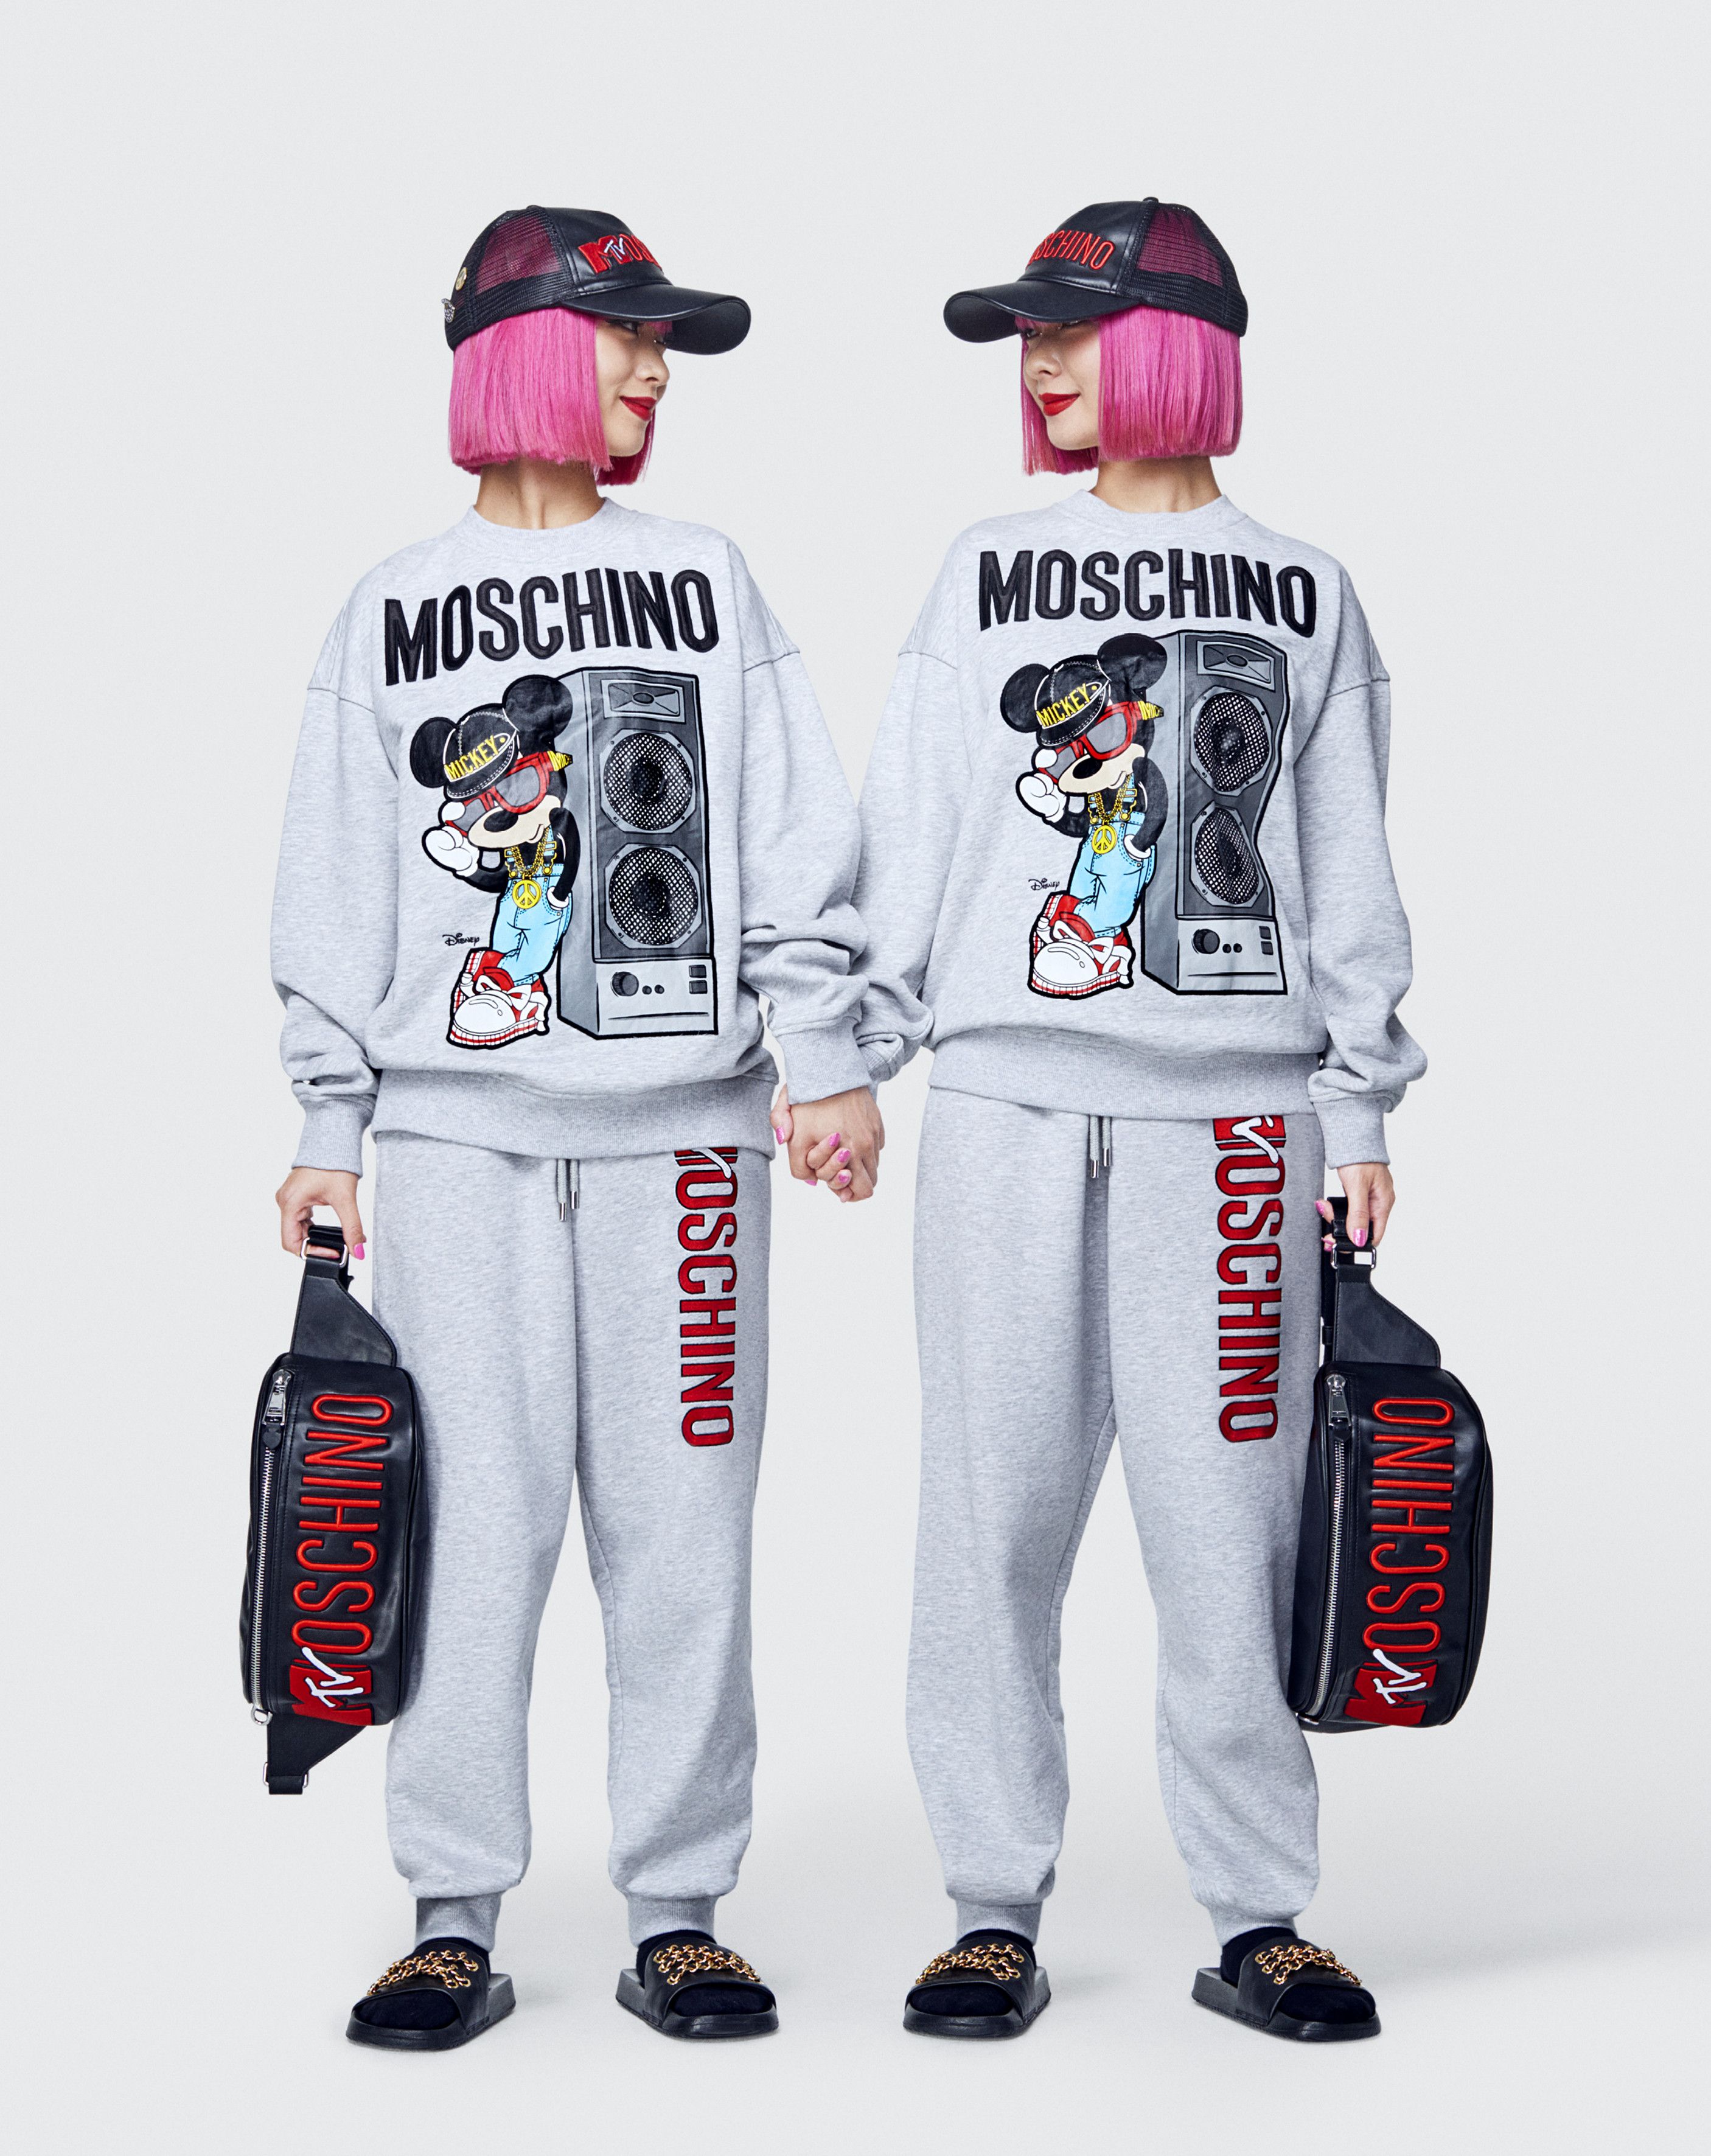 Moschino x H\u0026M Collaboration - First 